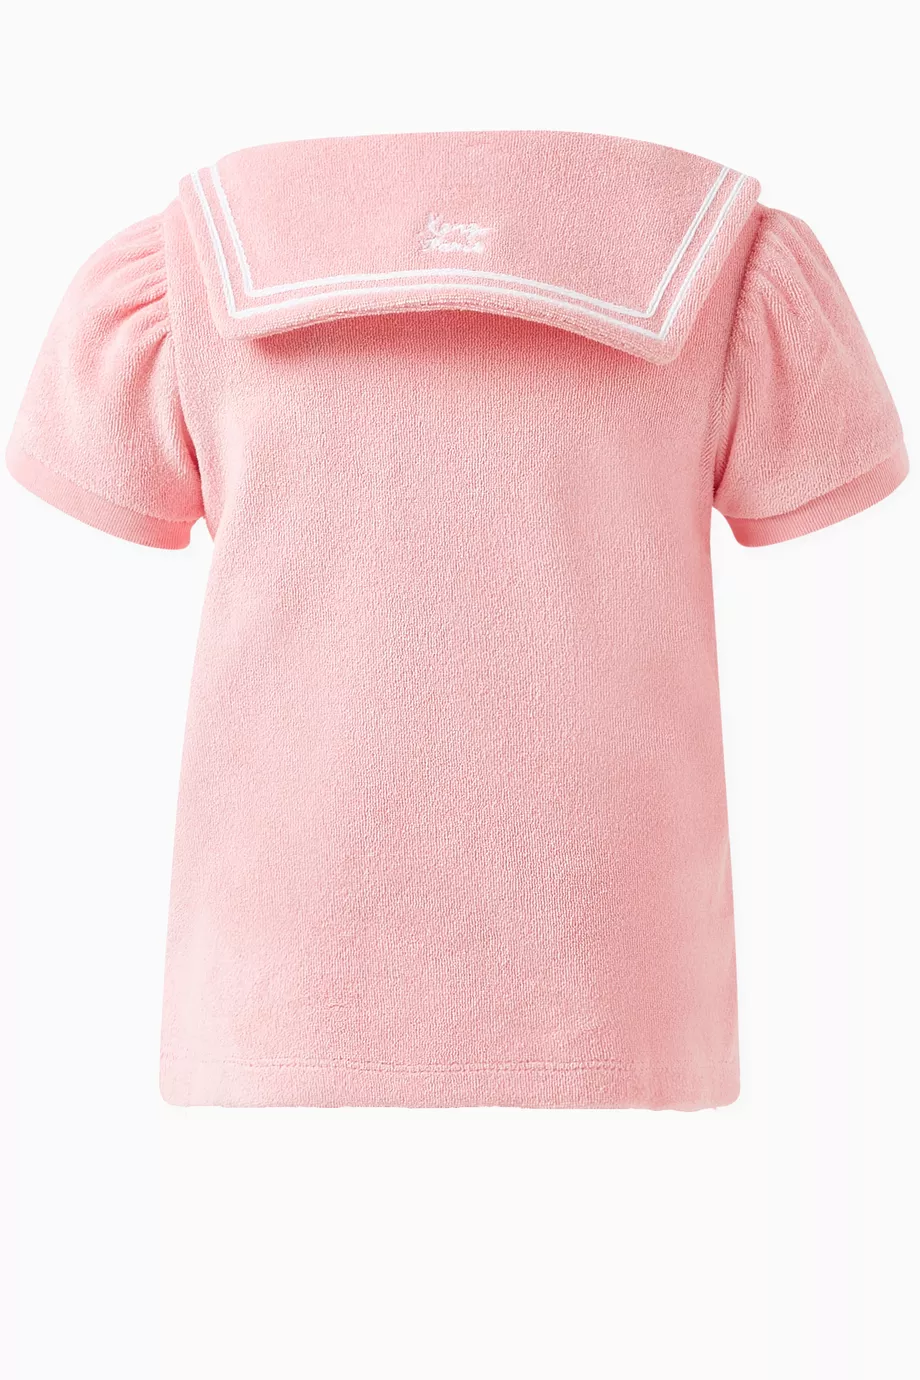 Kenzo Kids logo-embroidered terry-cloth dress set - Pink